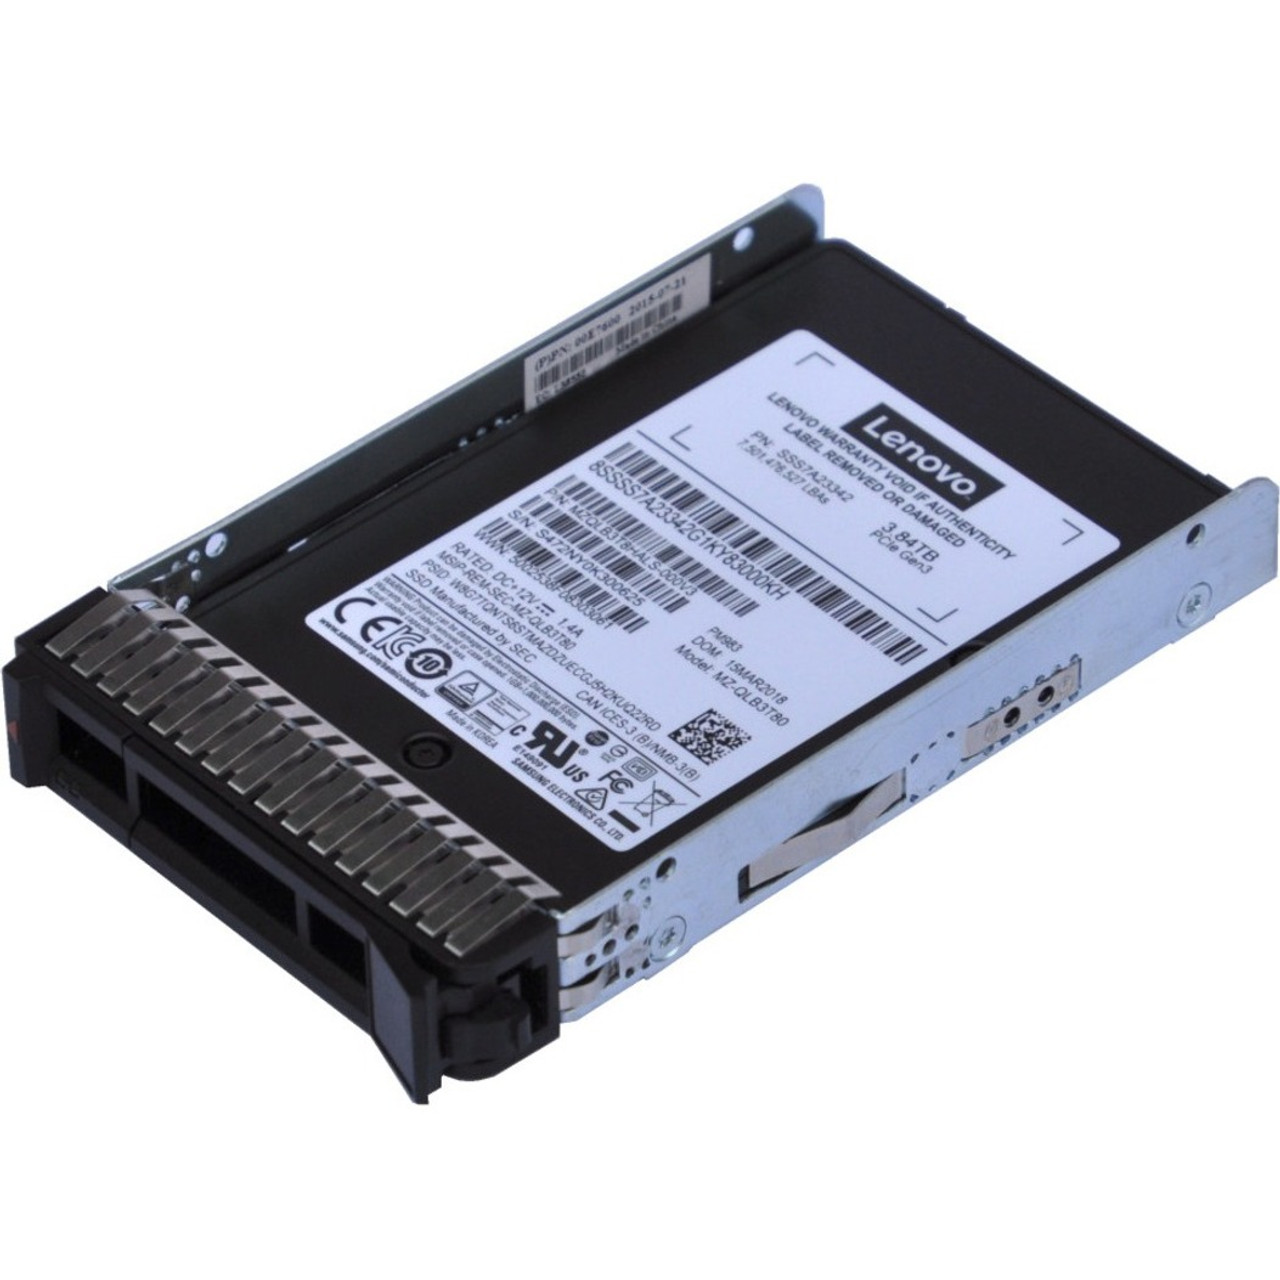 Lenovo PM983 7.68 TB Solid State Drive - 2.5" Internal - U.2 (SFF-8639)